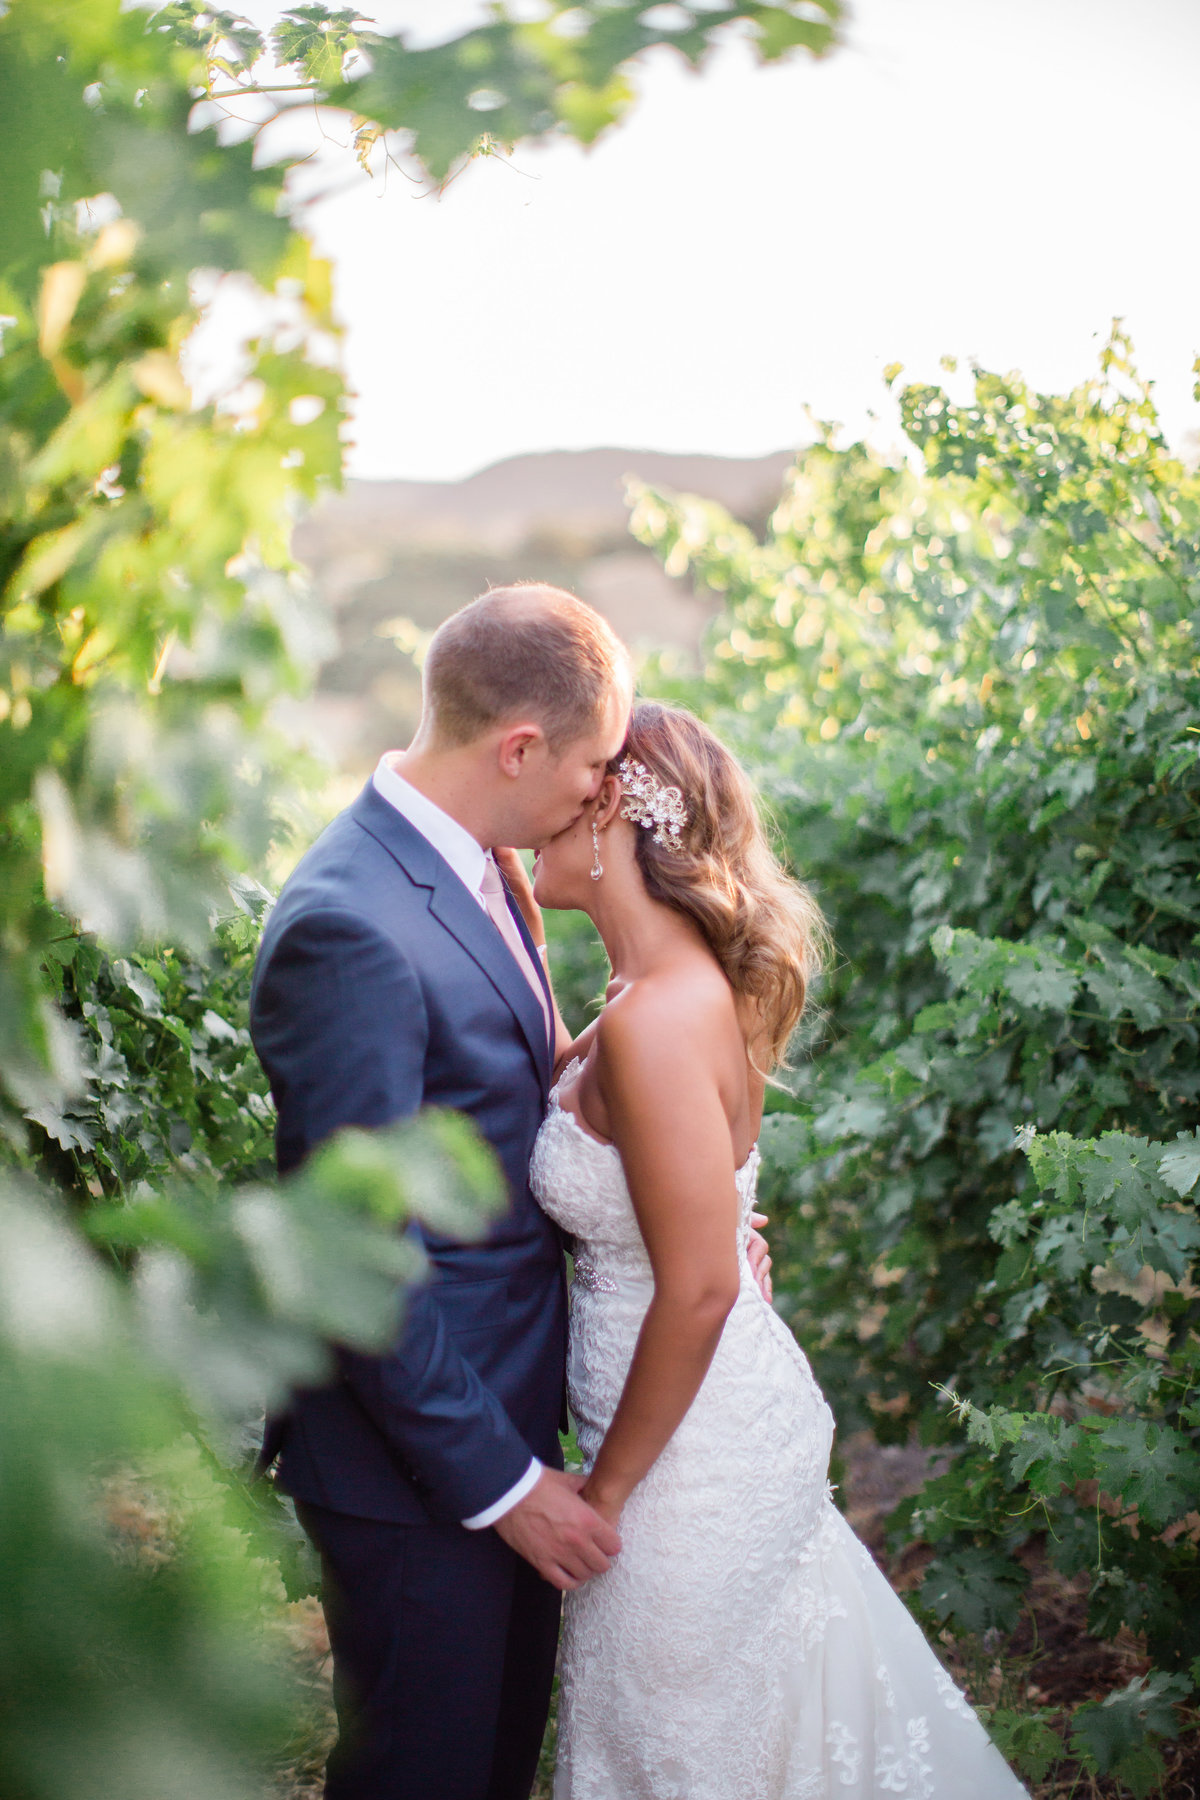 Jenna & Andrew's Oyster Ridge Wedding | Paso Robles Wedding Photographer | Katie Schoepflin Photography532